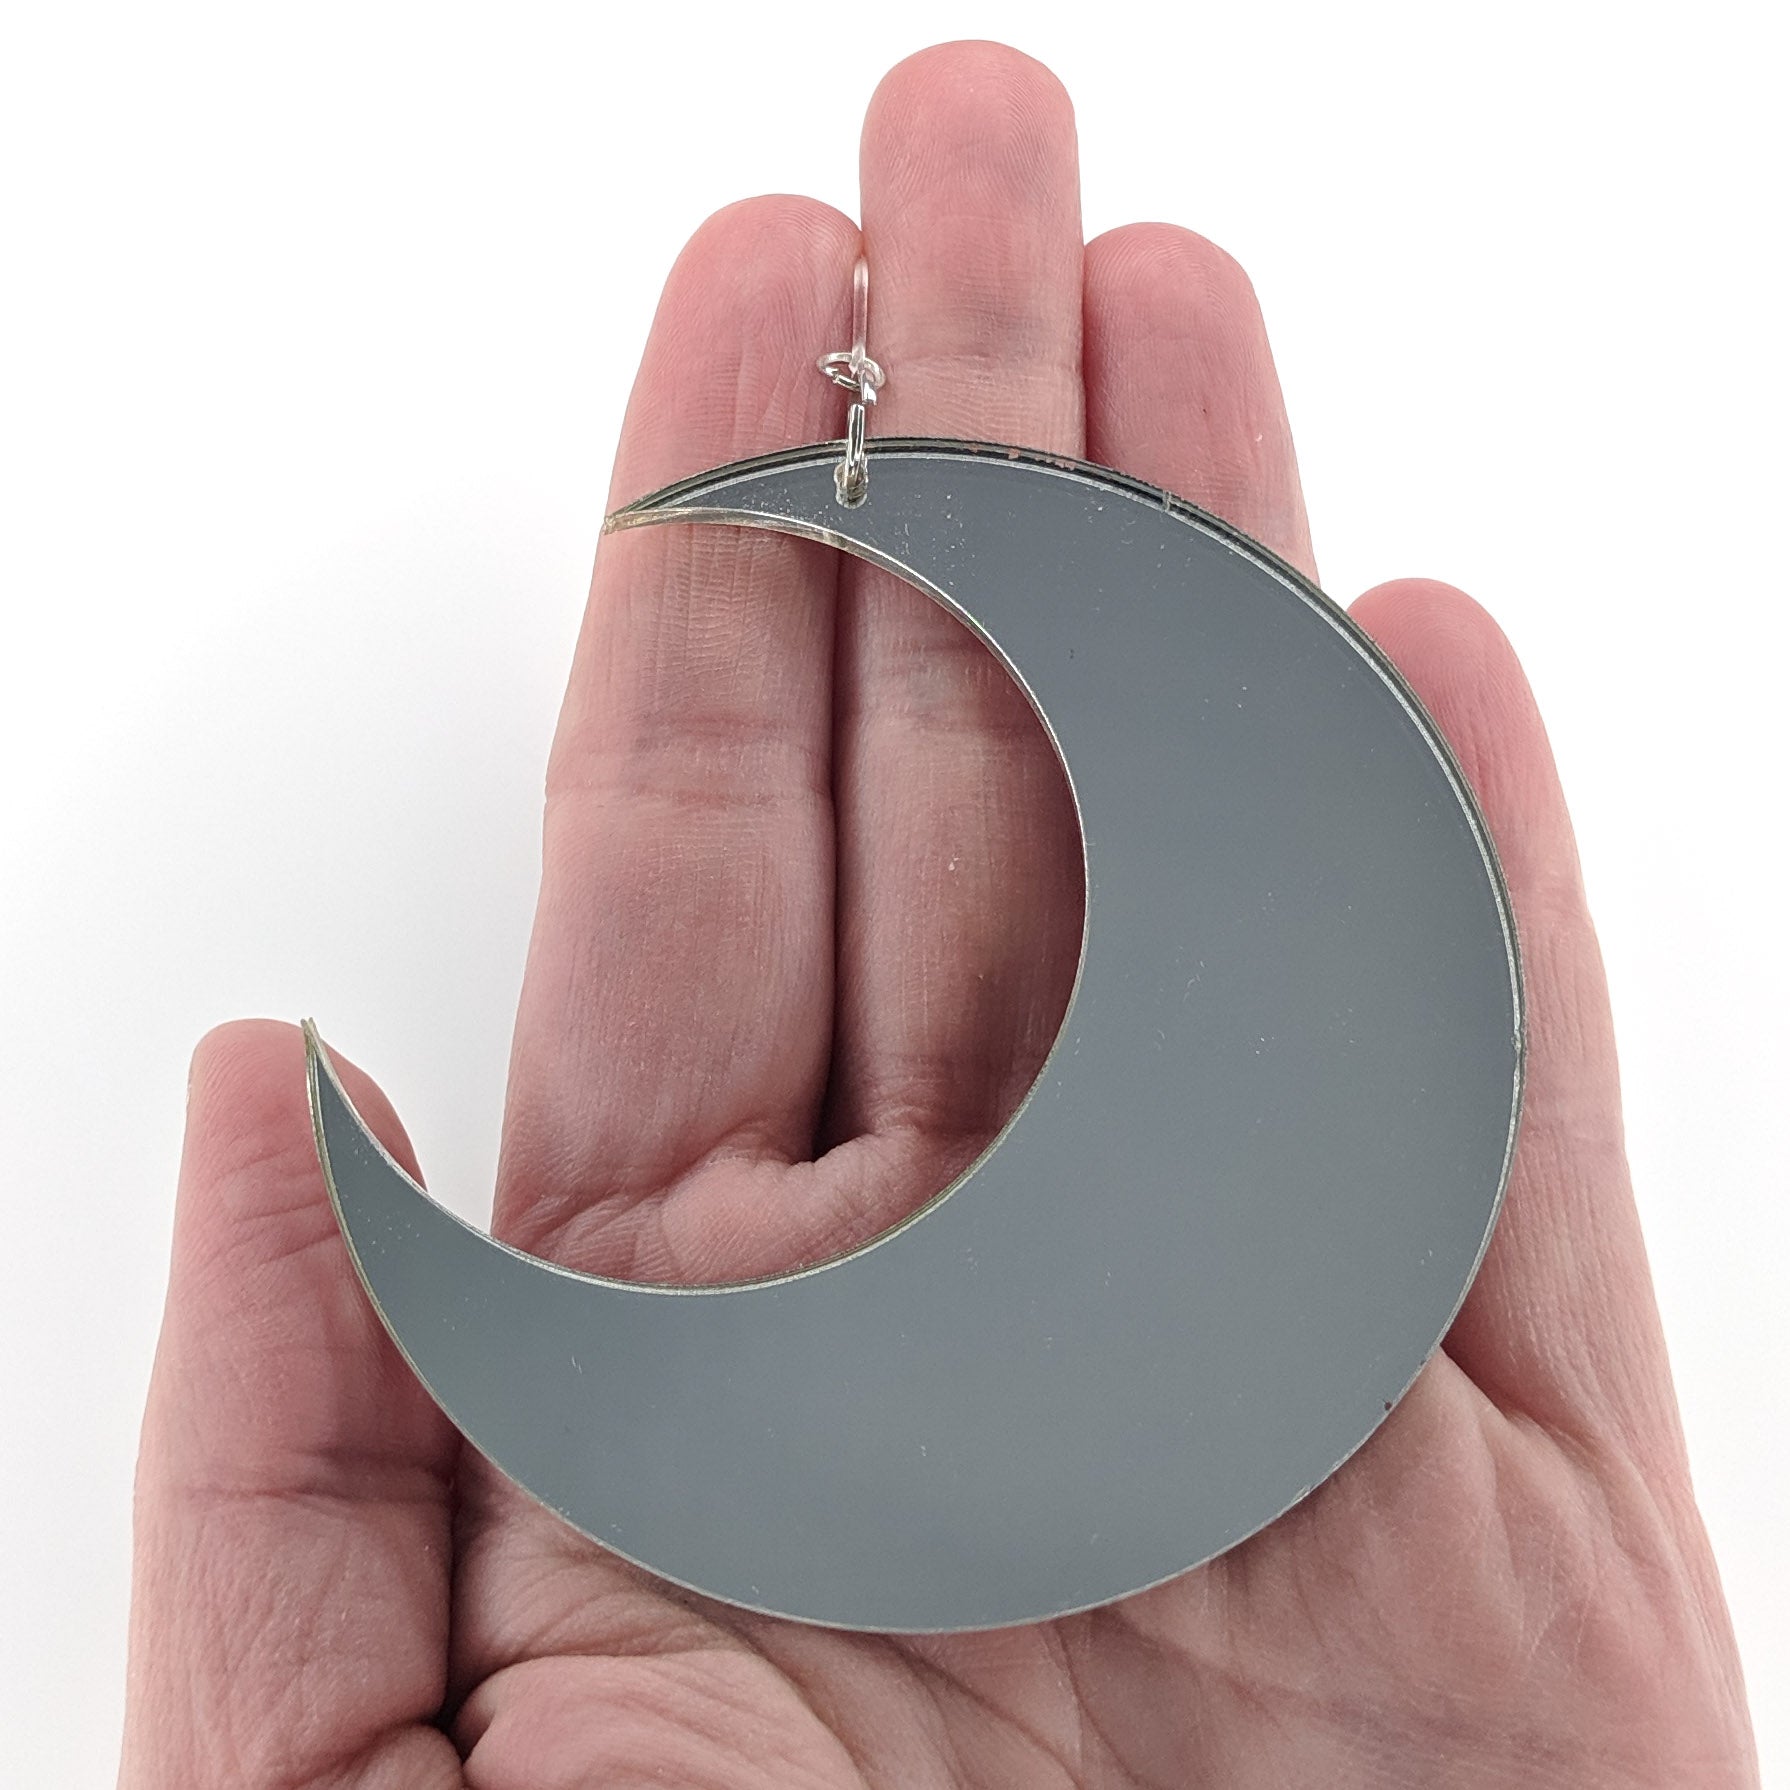 Mirrored Moon Earrings (Dangles) - size comparison hand